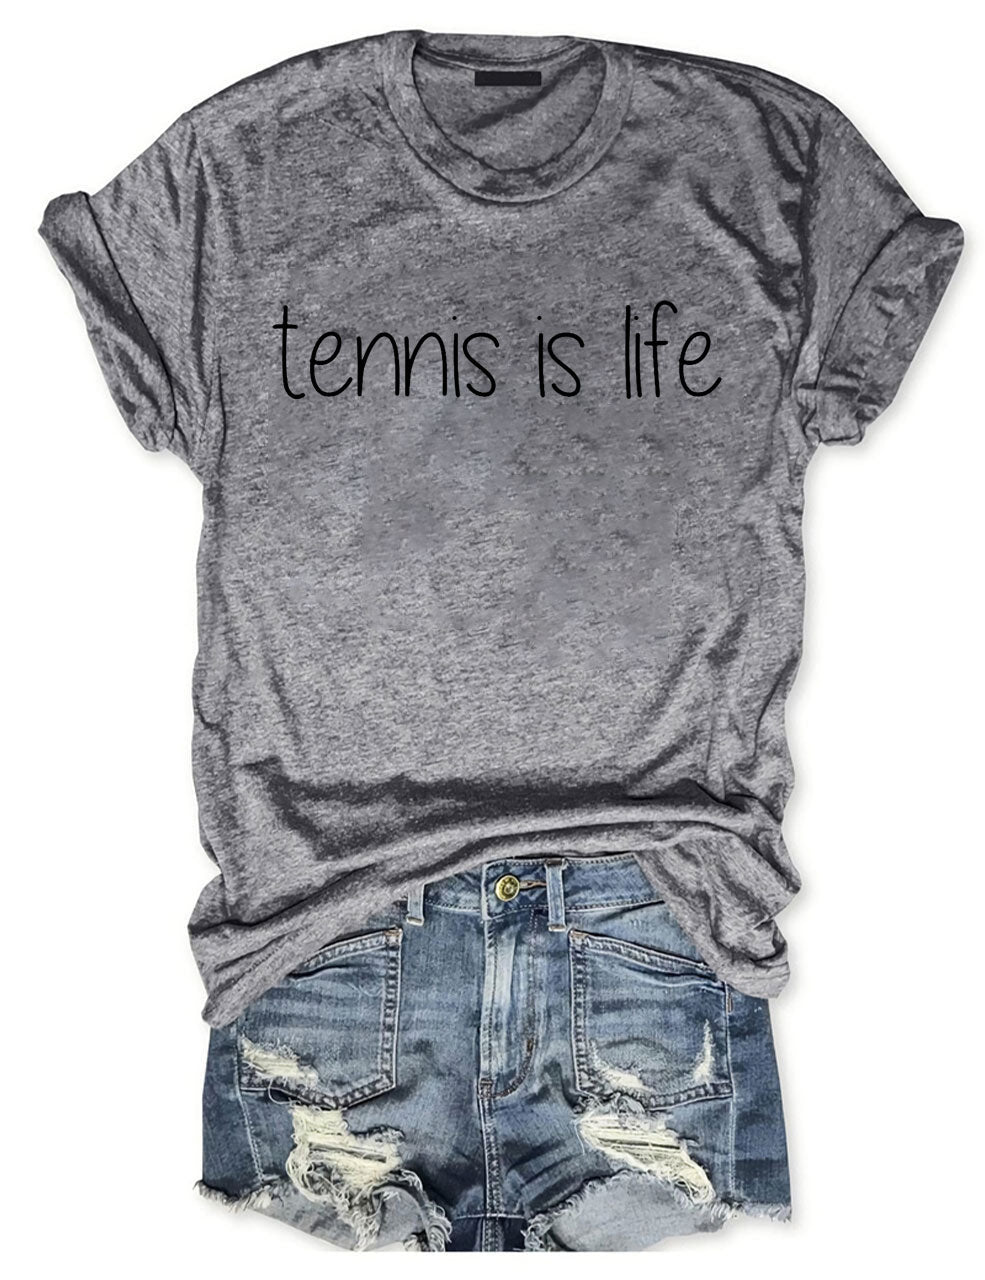 Tennis is life T-Shirt